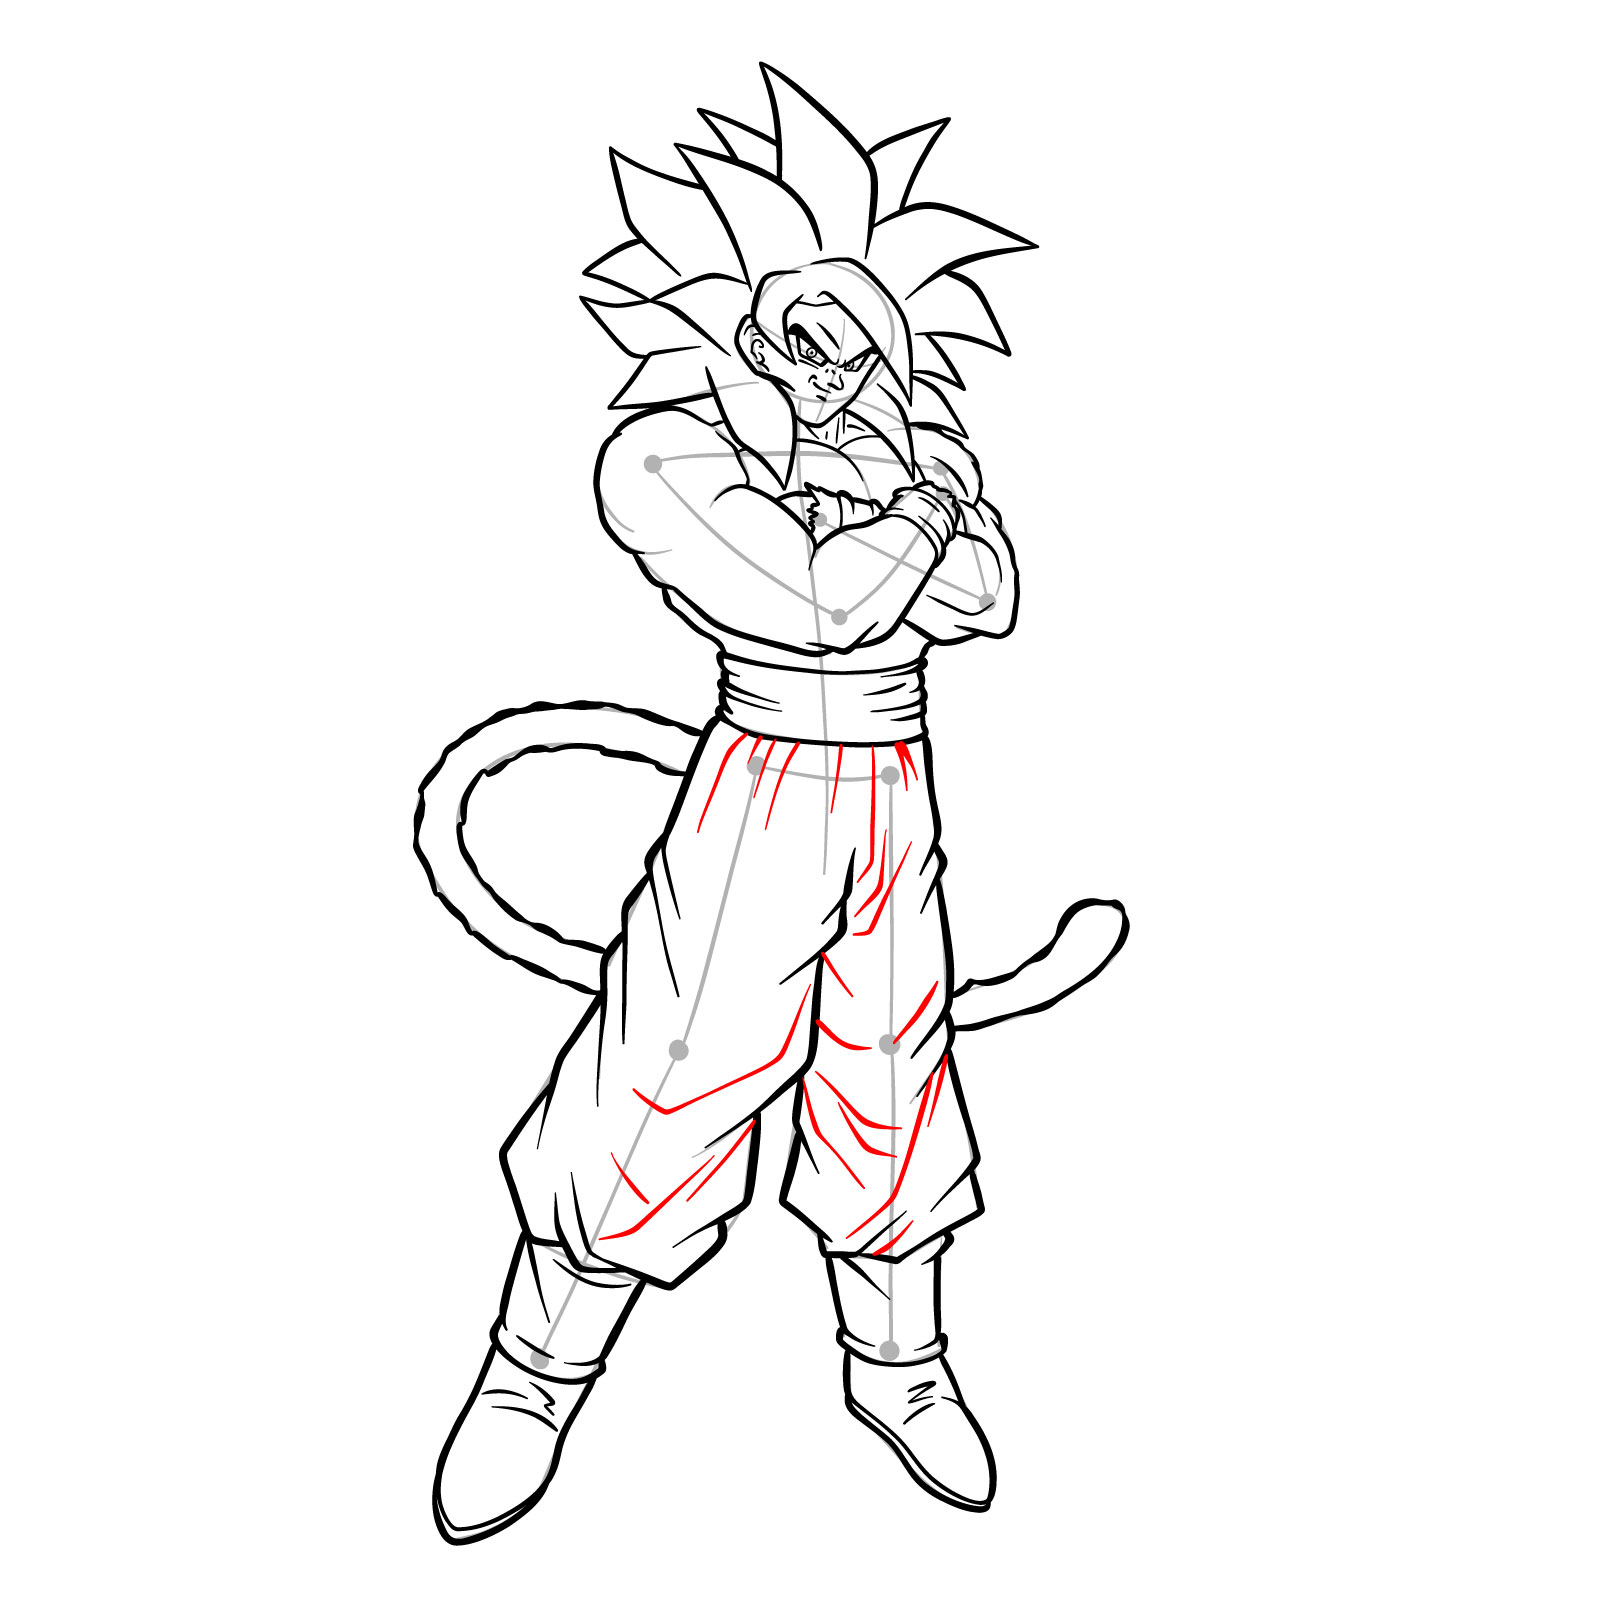 How to tát draw Goku Super Saiyan 4 - step 32